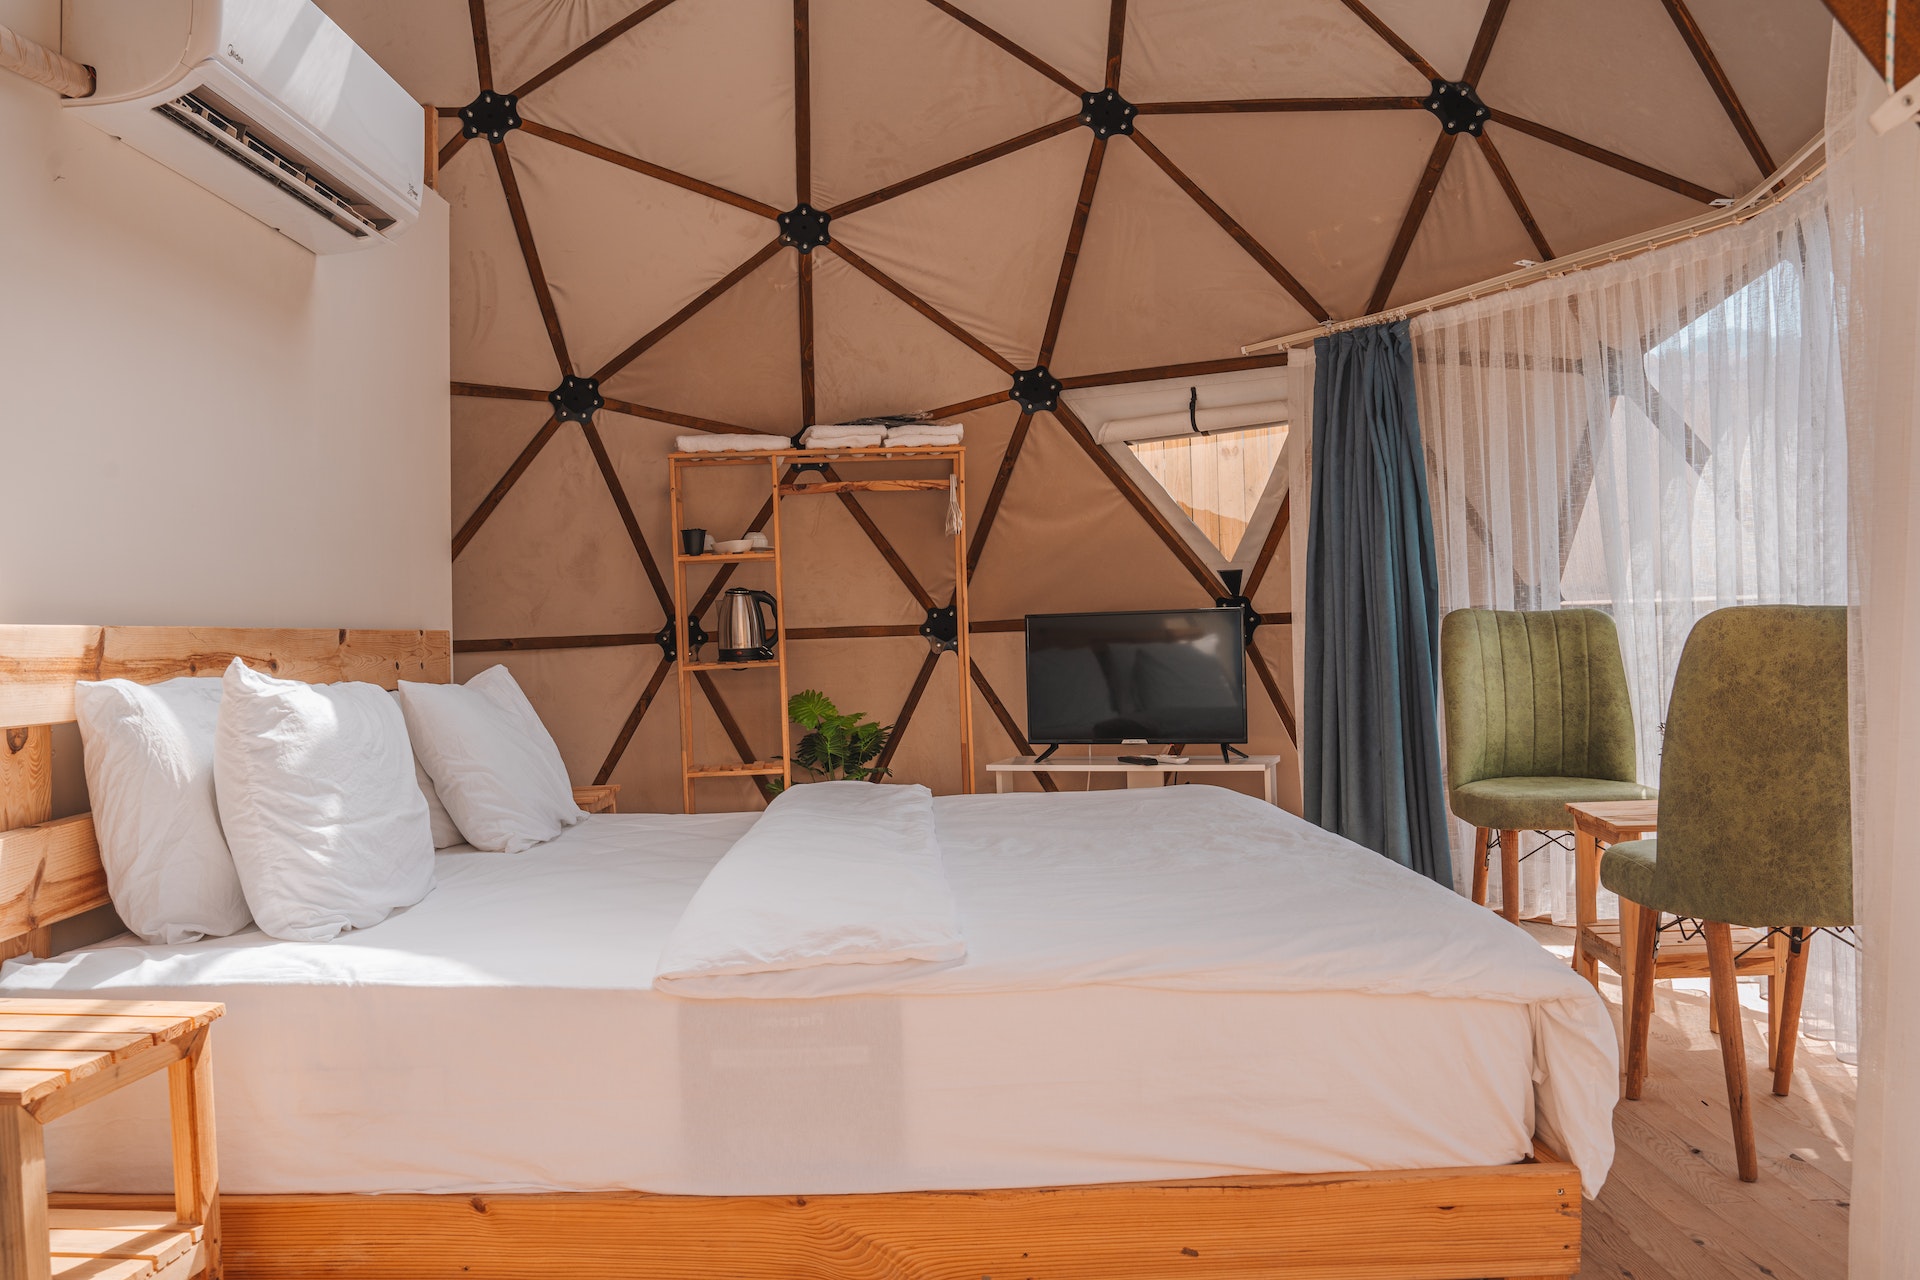 A luxury bedroom in a hotel | Source: Pexels